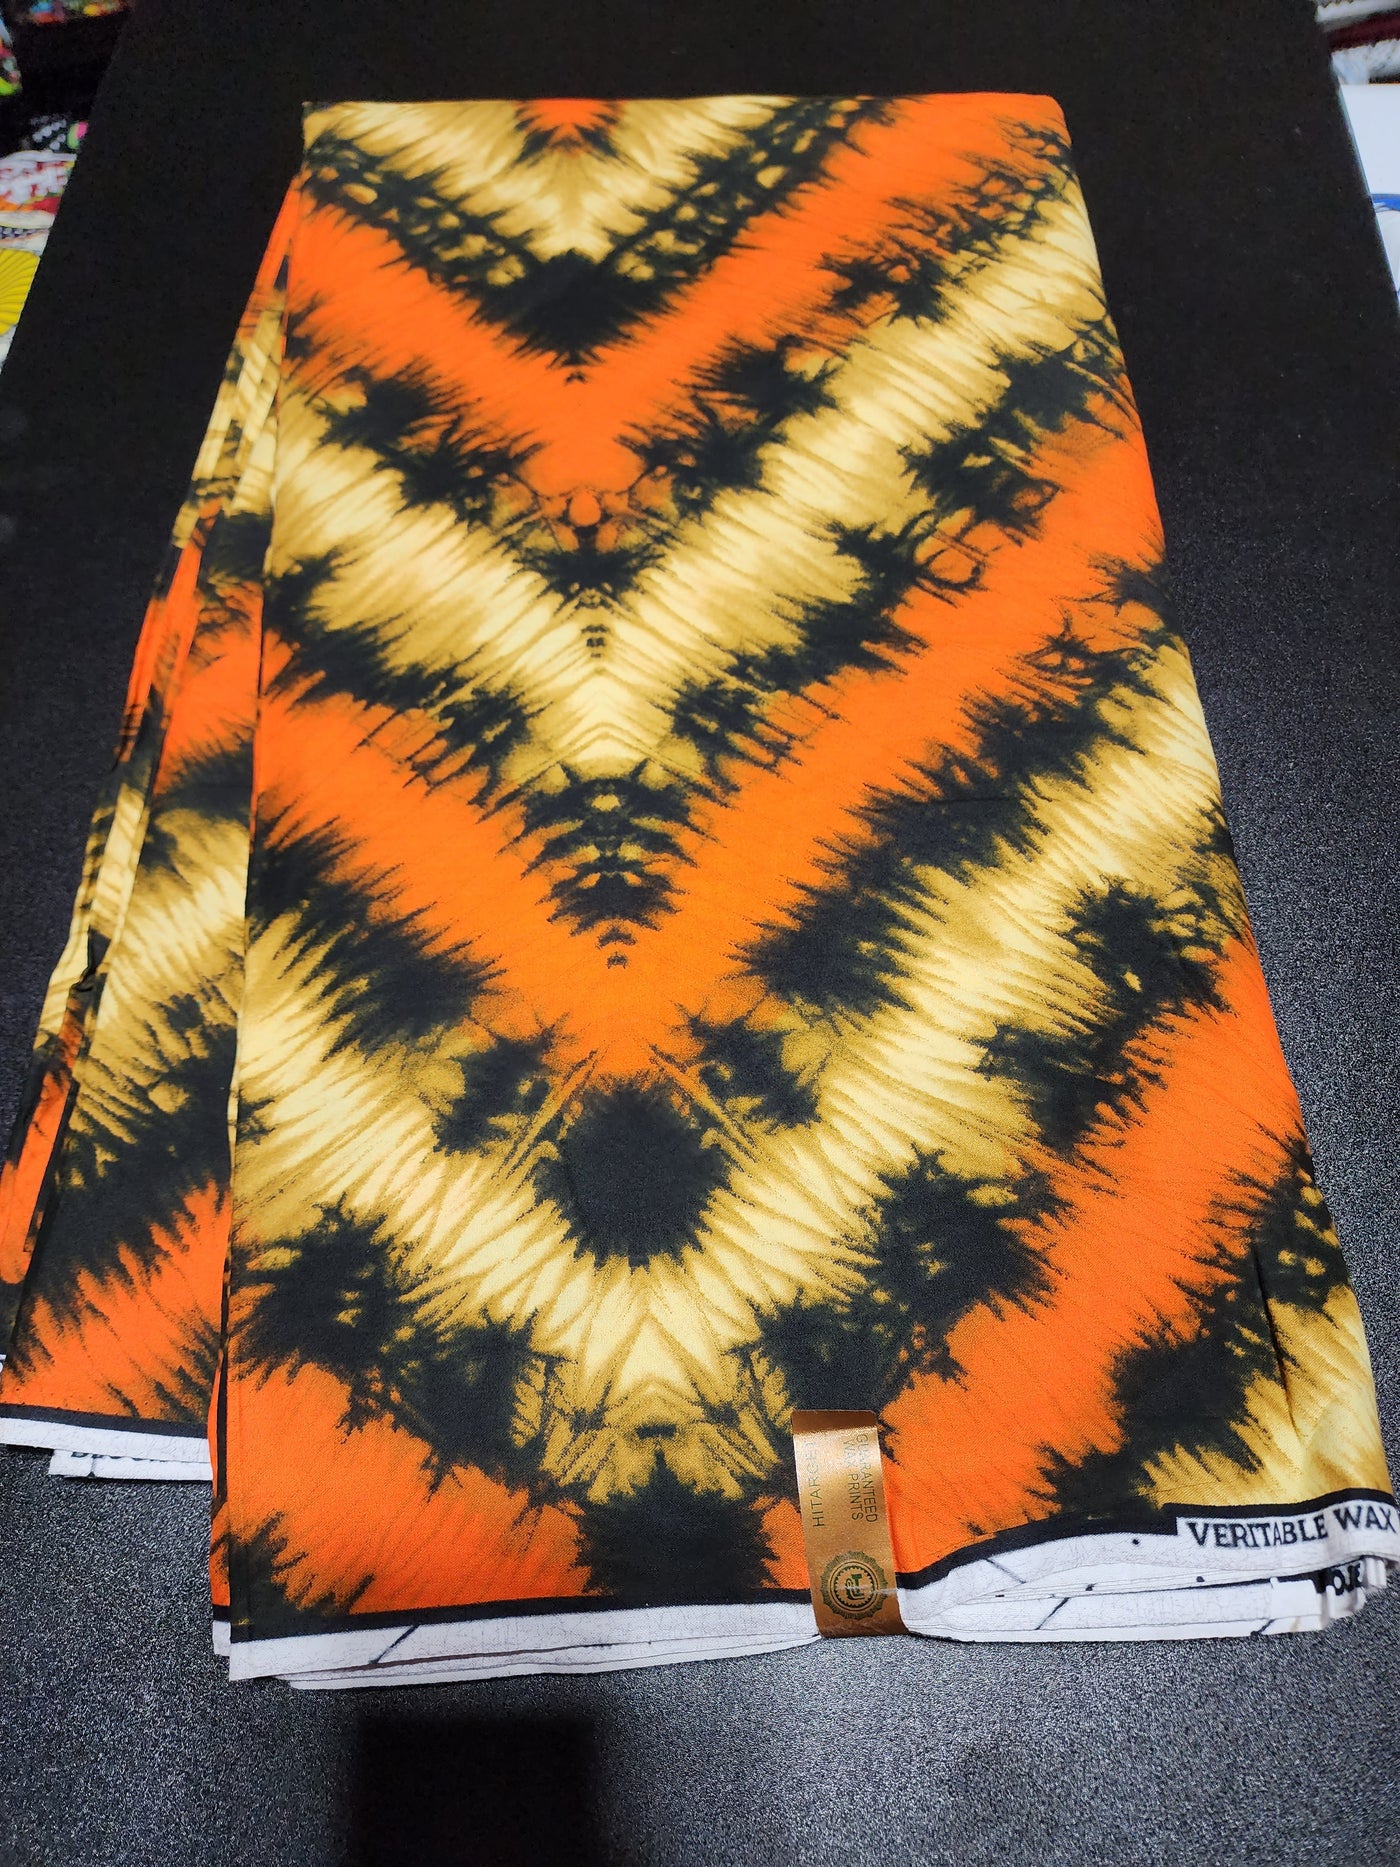 Orange and Black Ankara Print Fabric ACS2069